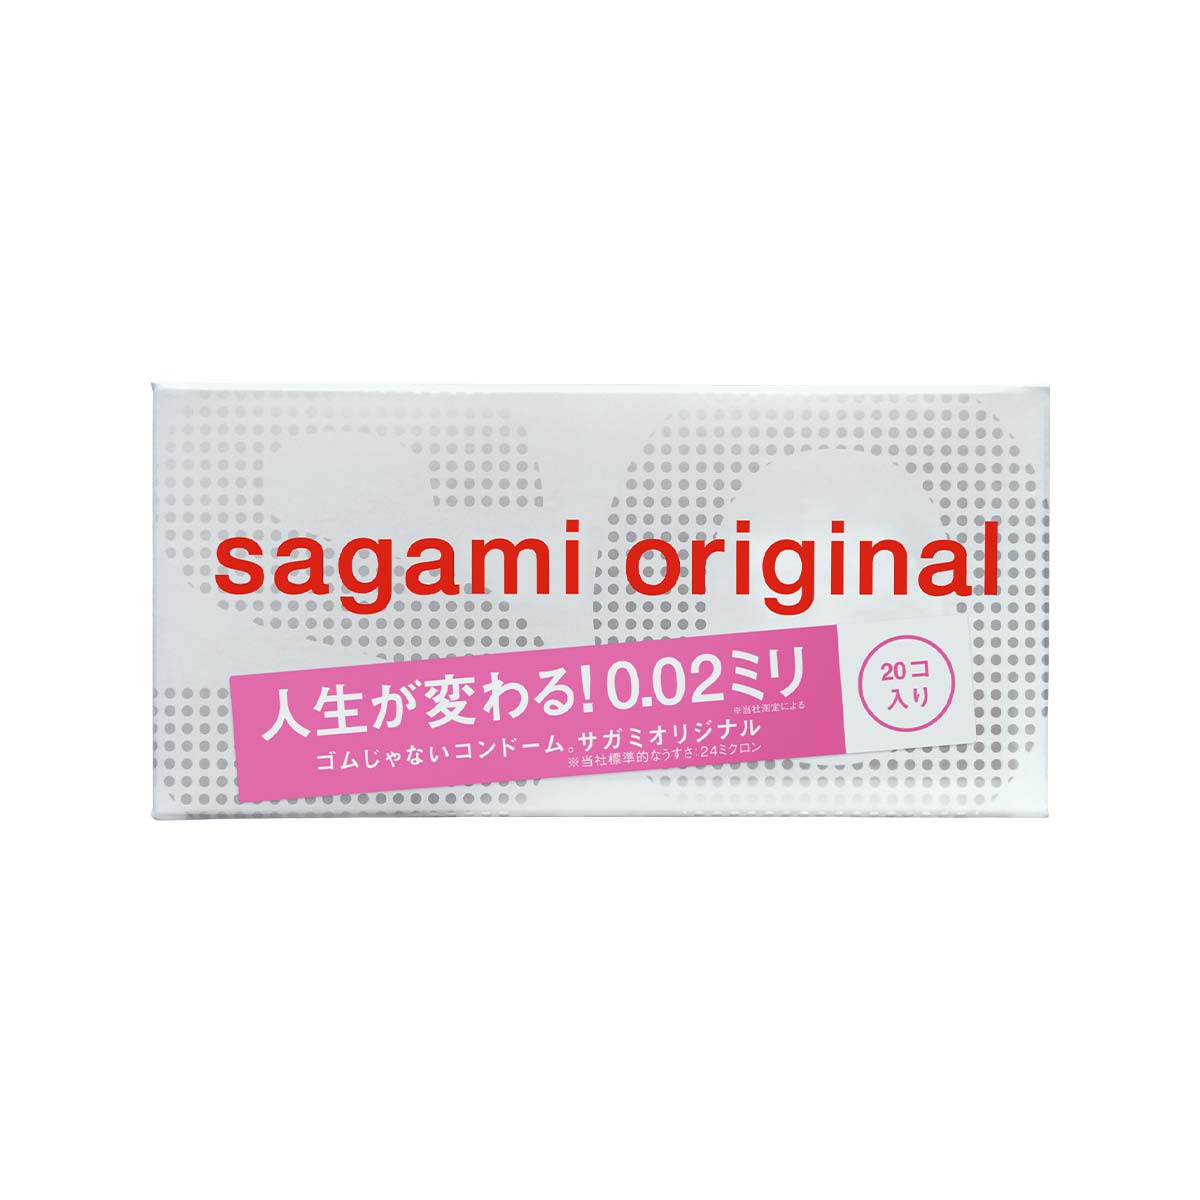 Sagami Original 0.02 (2nd generation) 20's Pack PU Condom-p_2